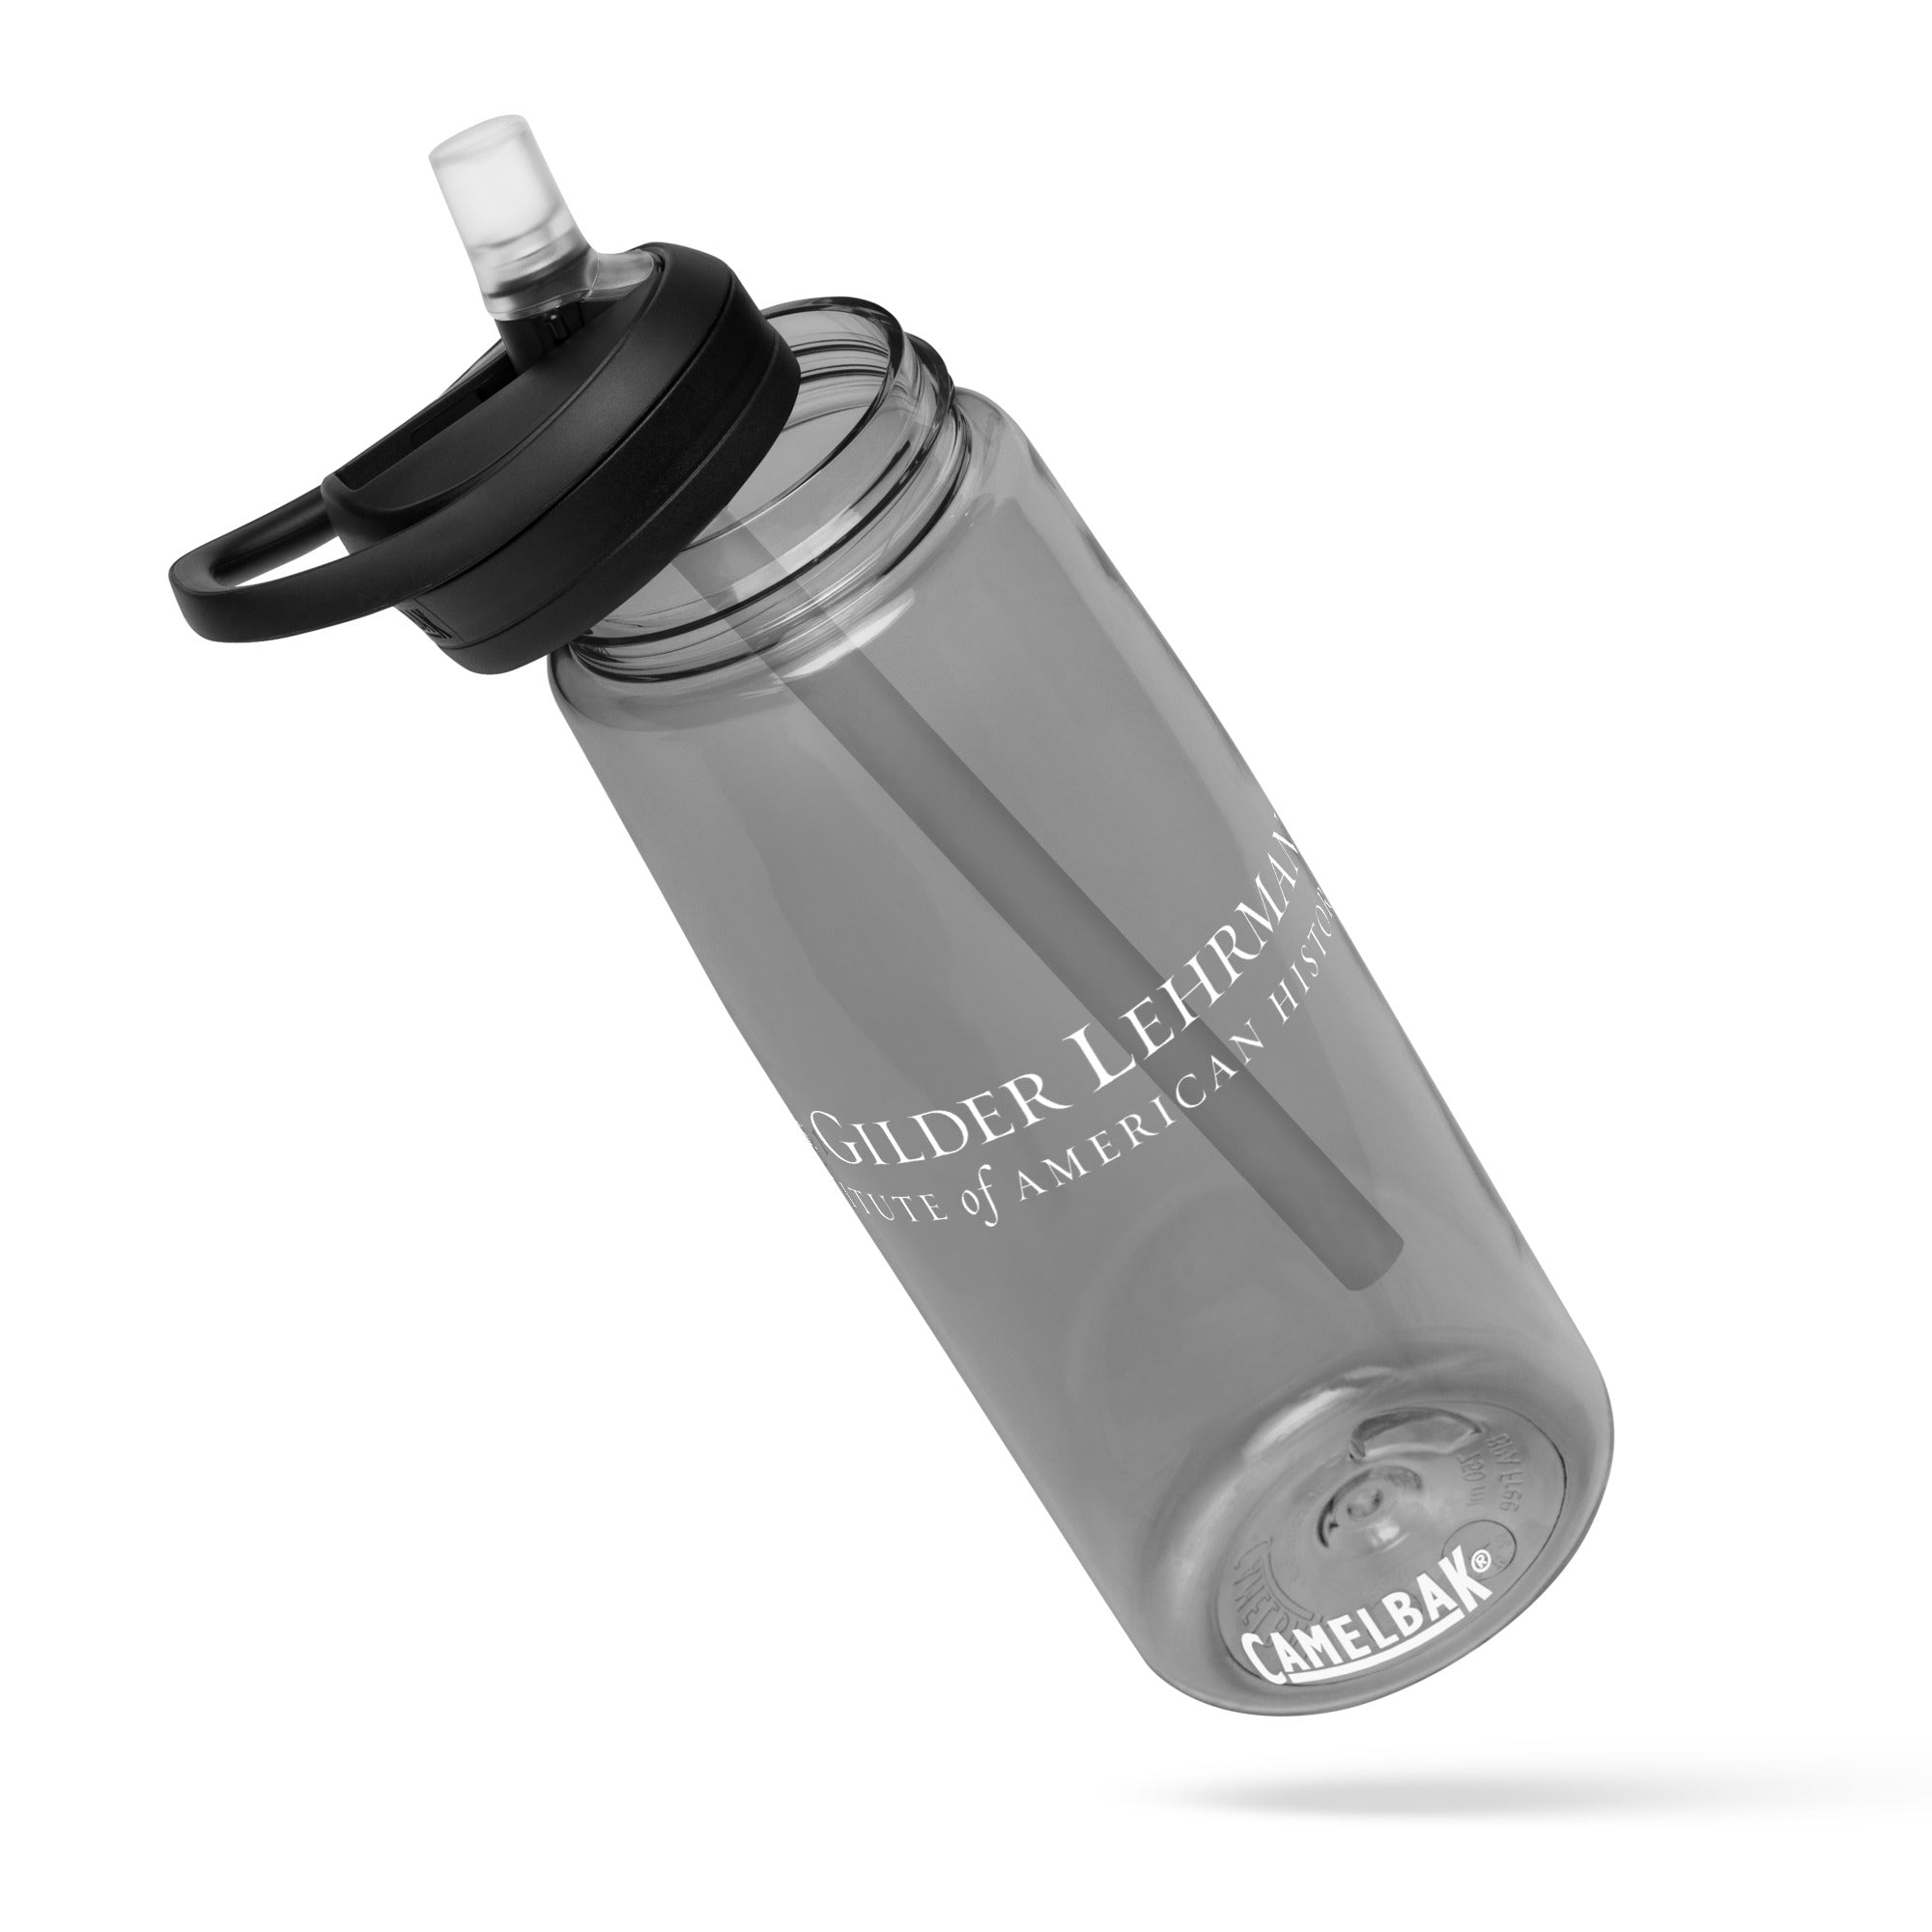 Vertra Logo Water Bottle